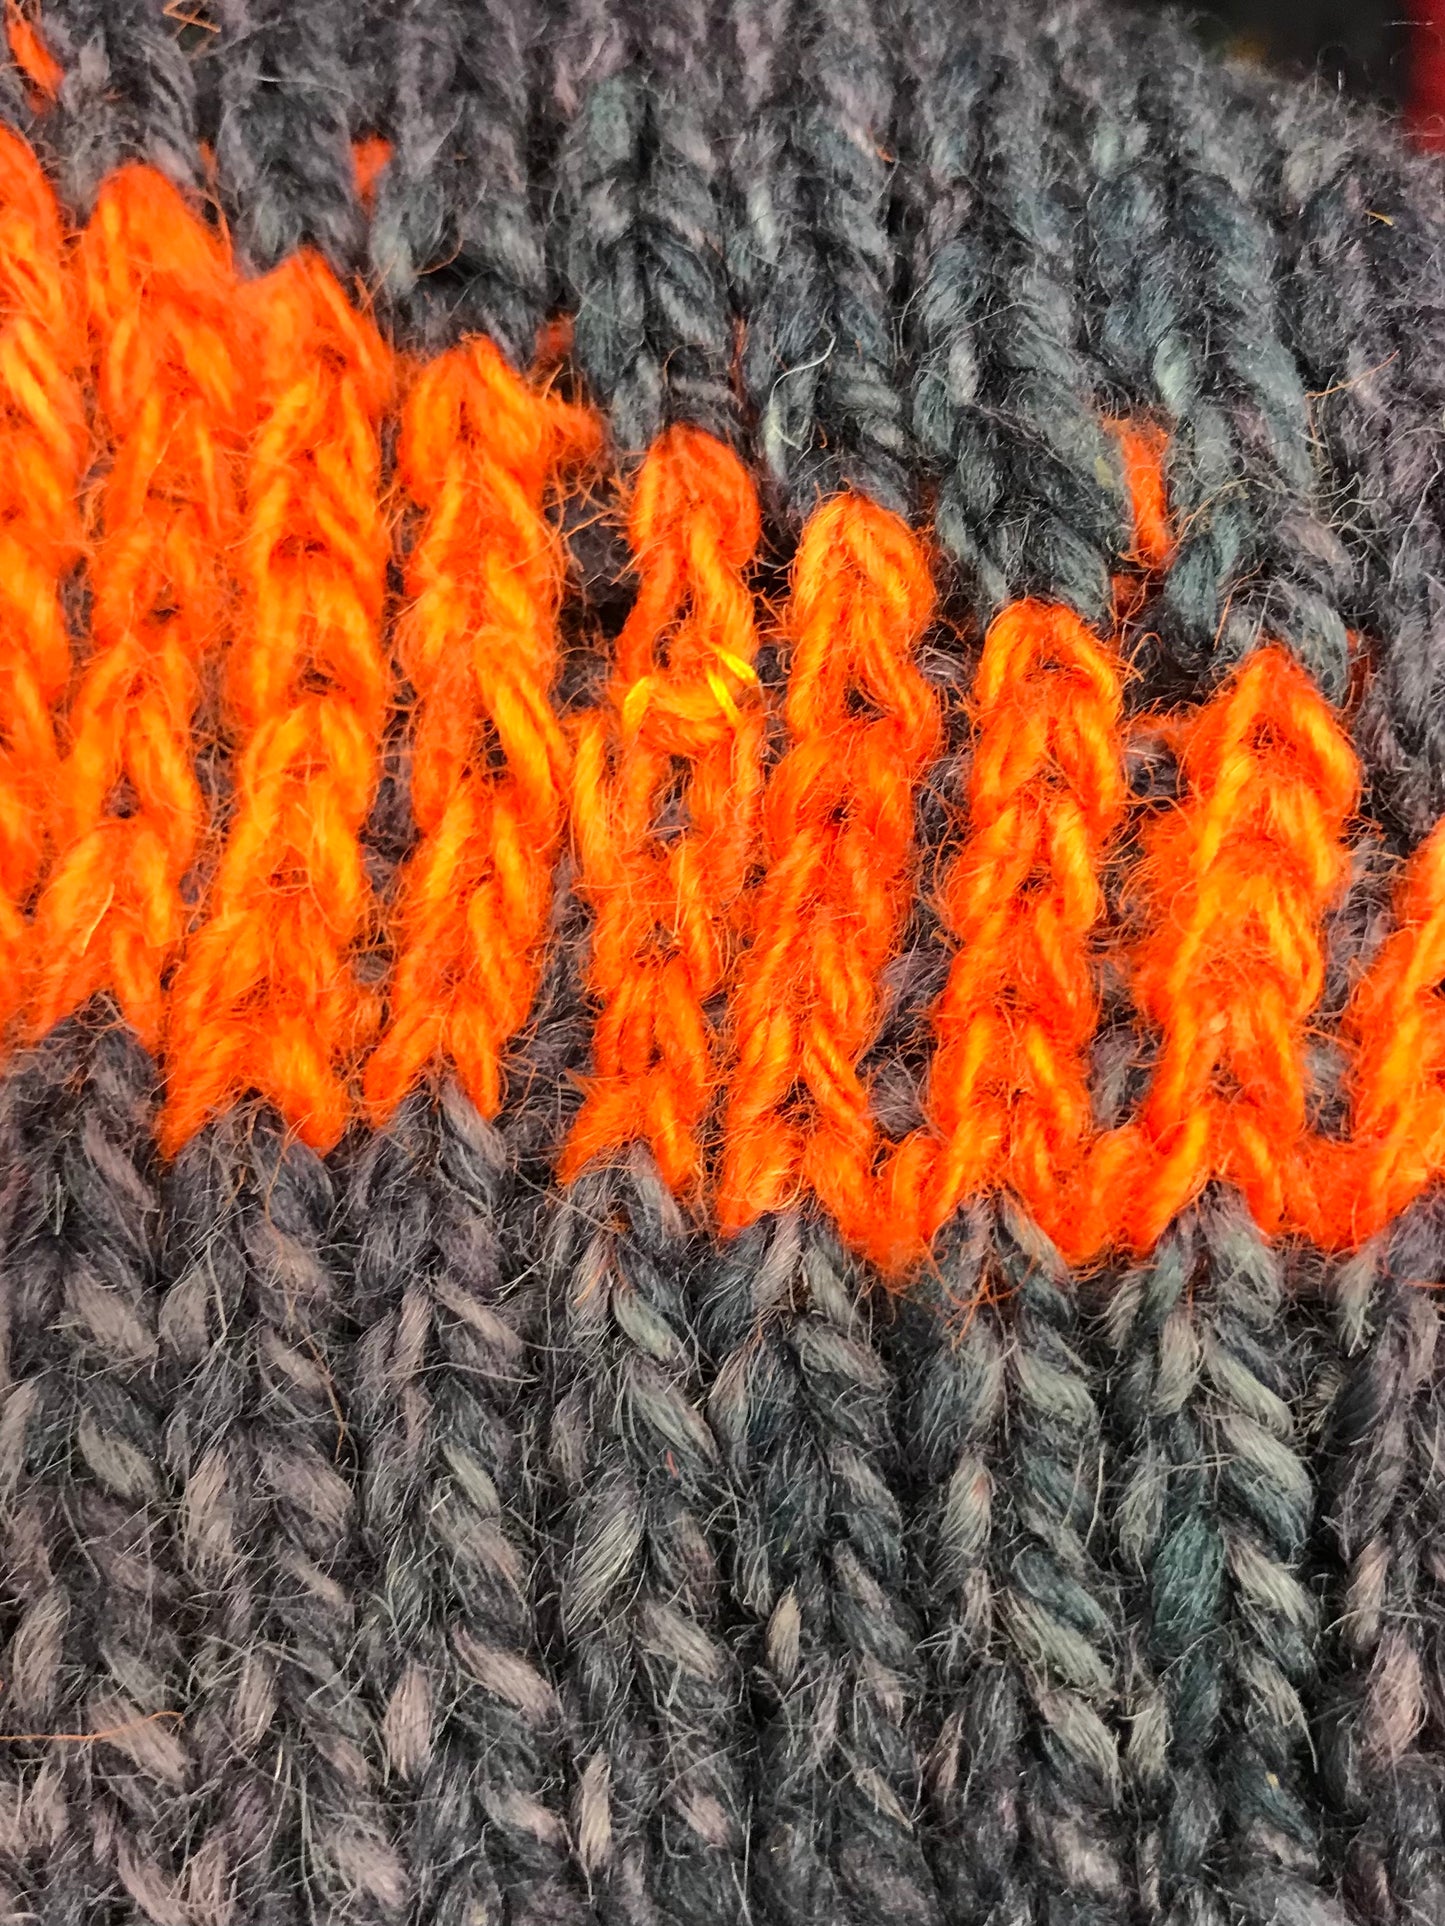 Vintage Hand Knit Sweater  [J25331]